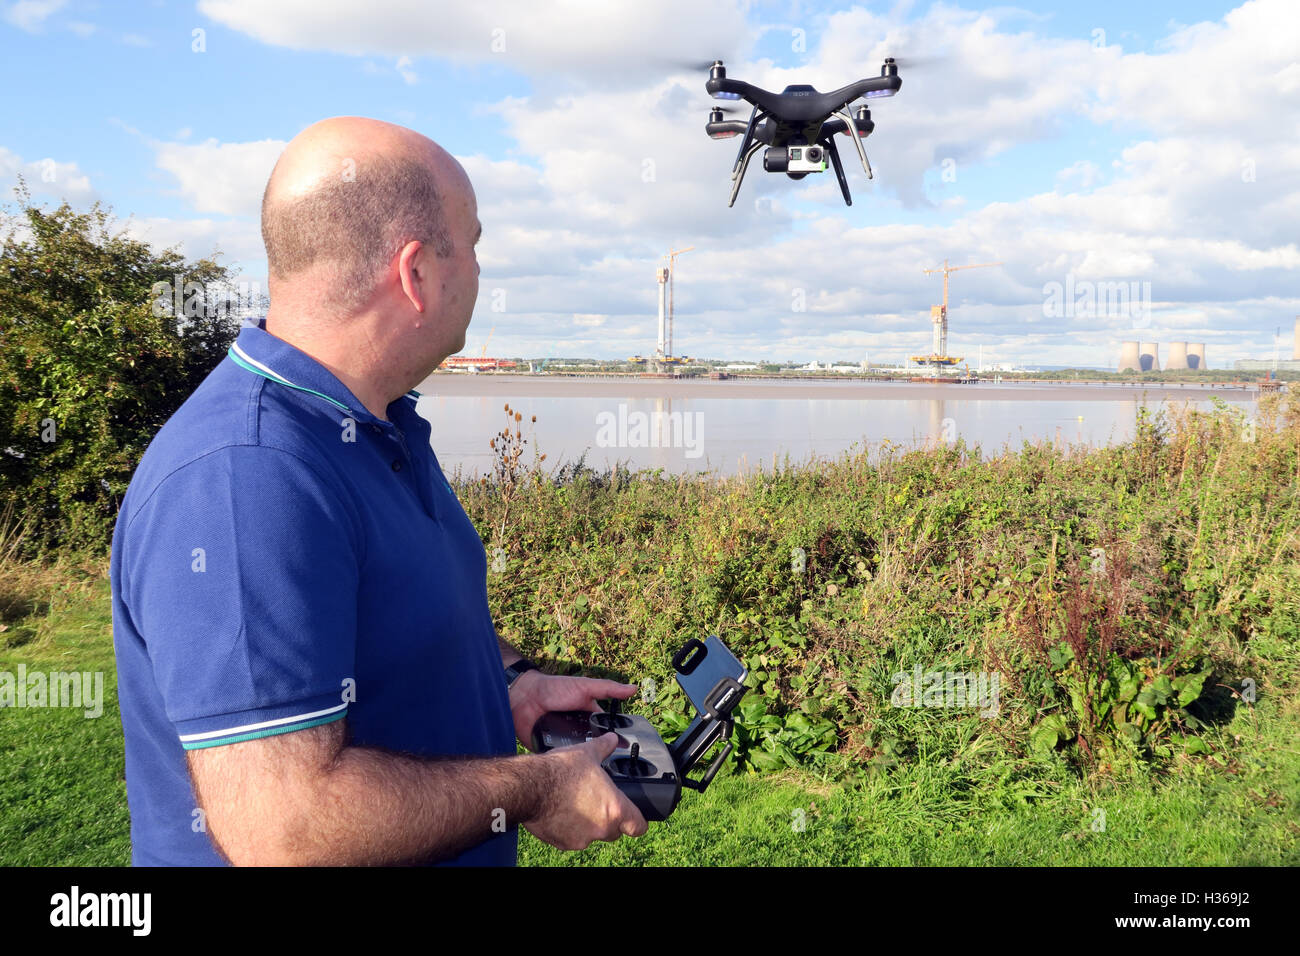 Mann fliegt 3DR RTF X8 Drohne, nahe River Mersey, Runcorn, Merseyside, England, UK Stockfoto